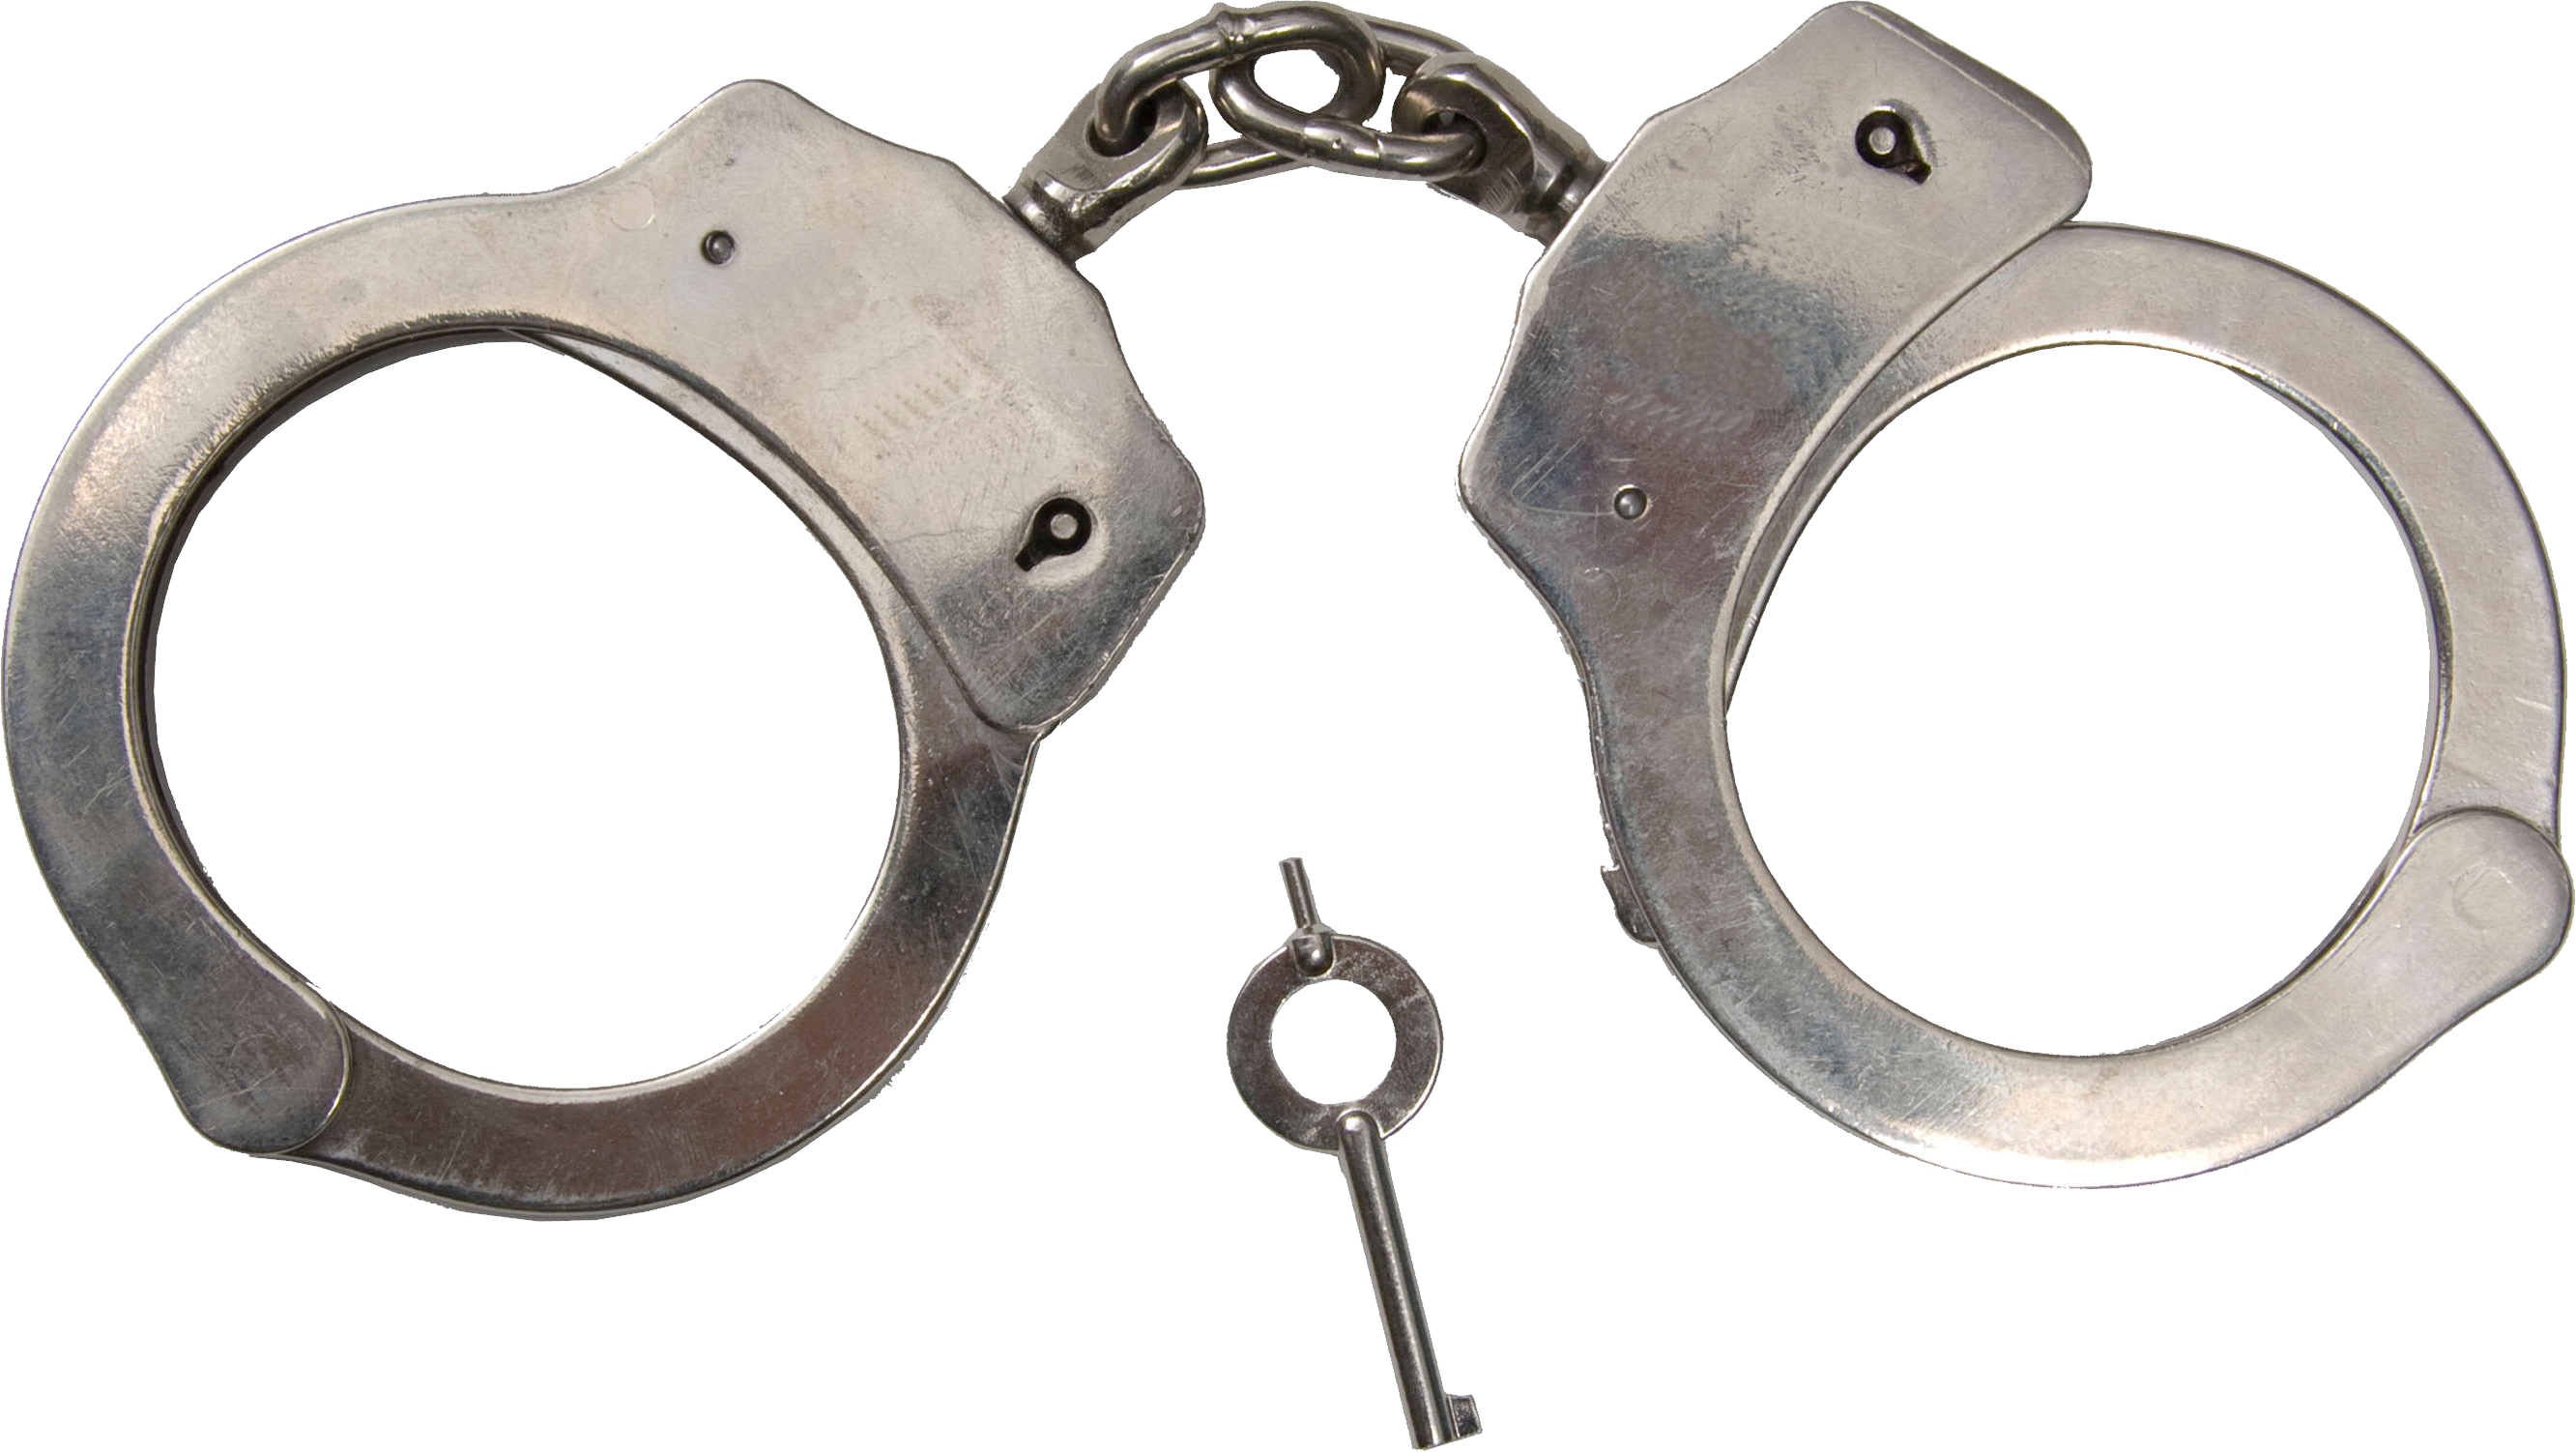 handcuffs clipart shackles